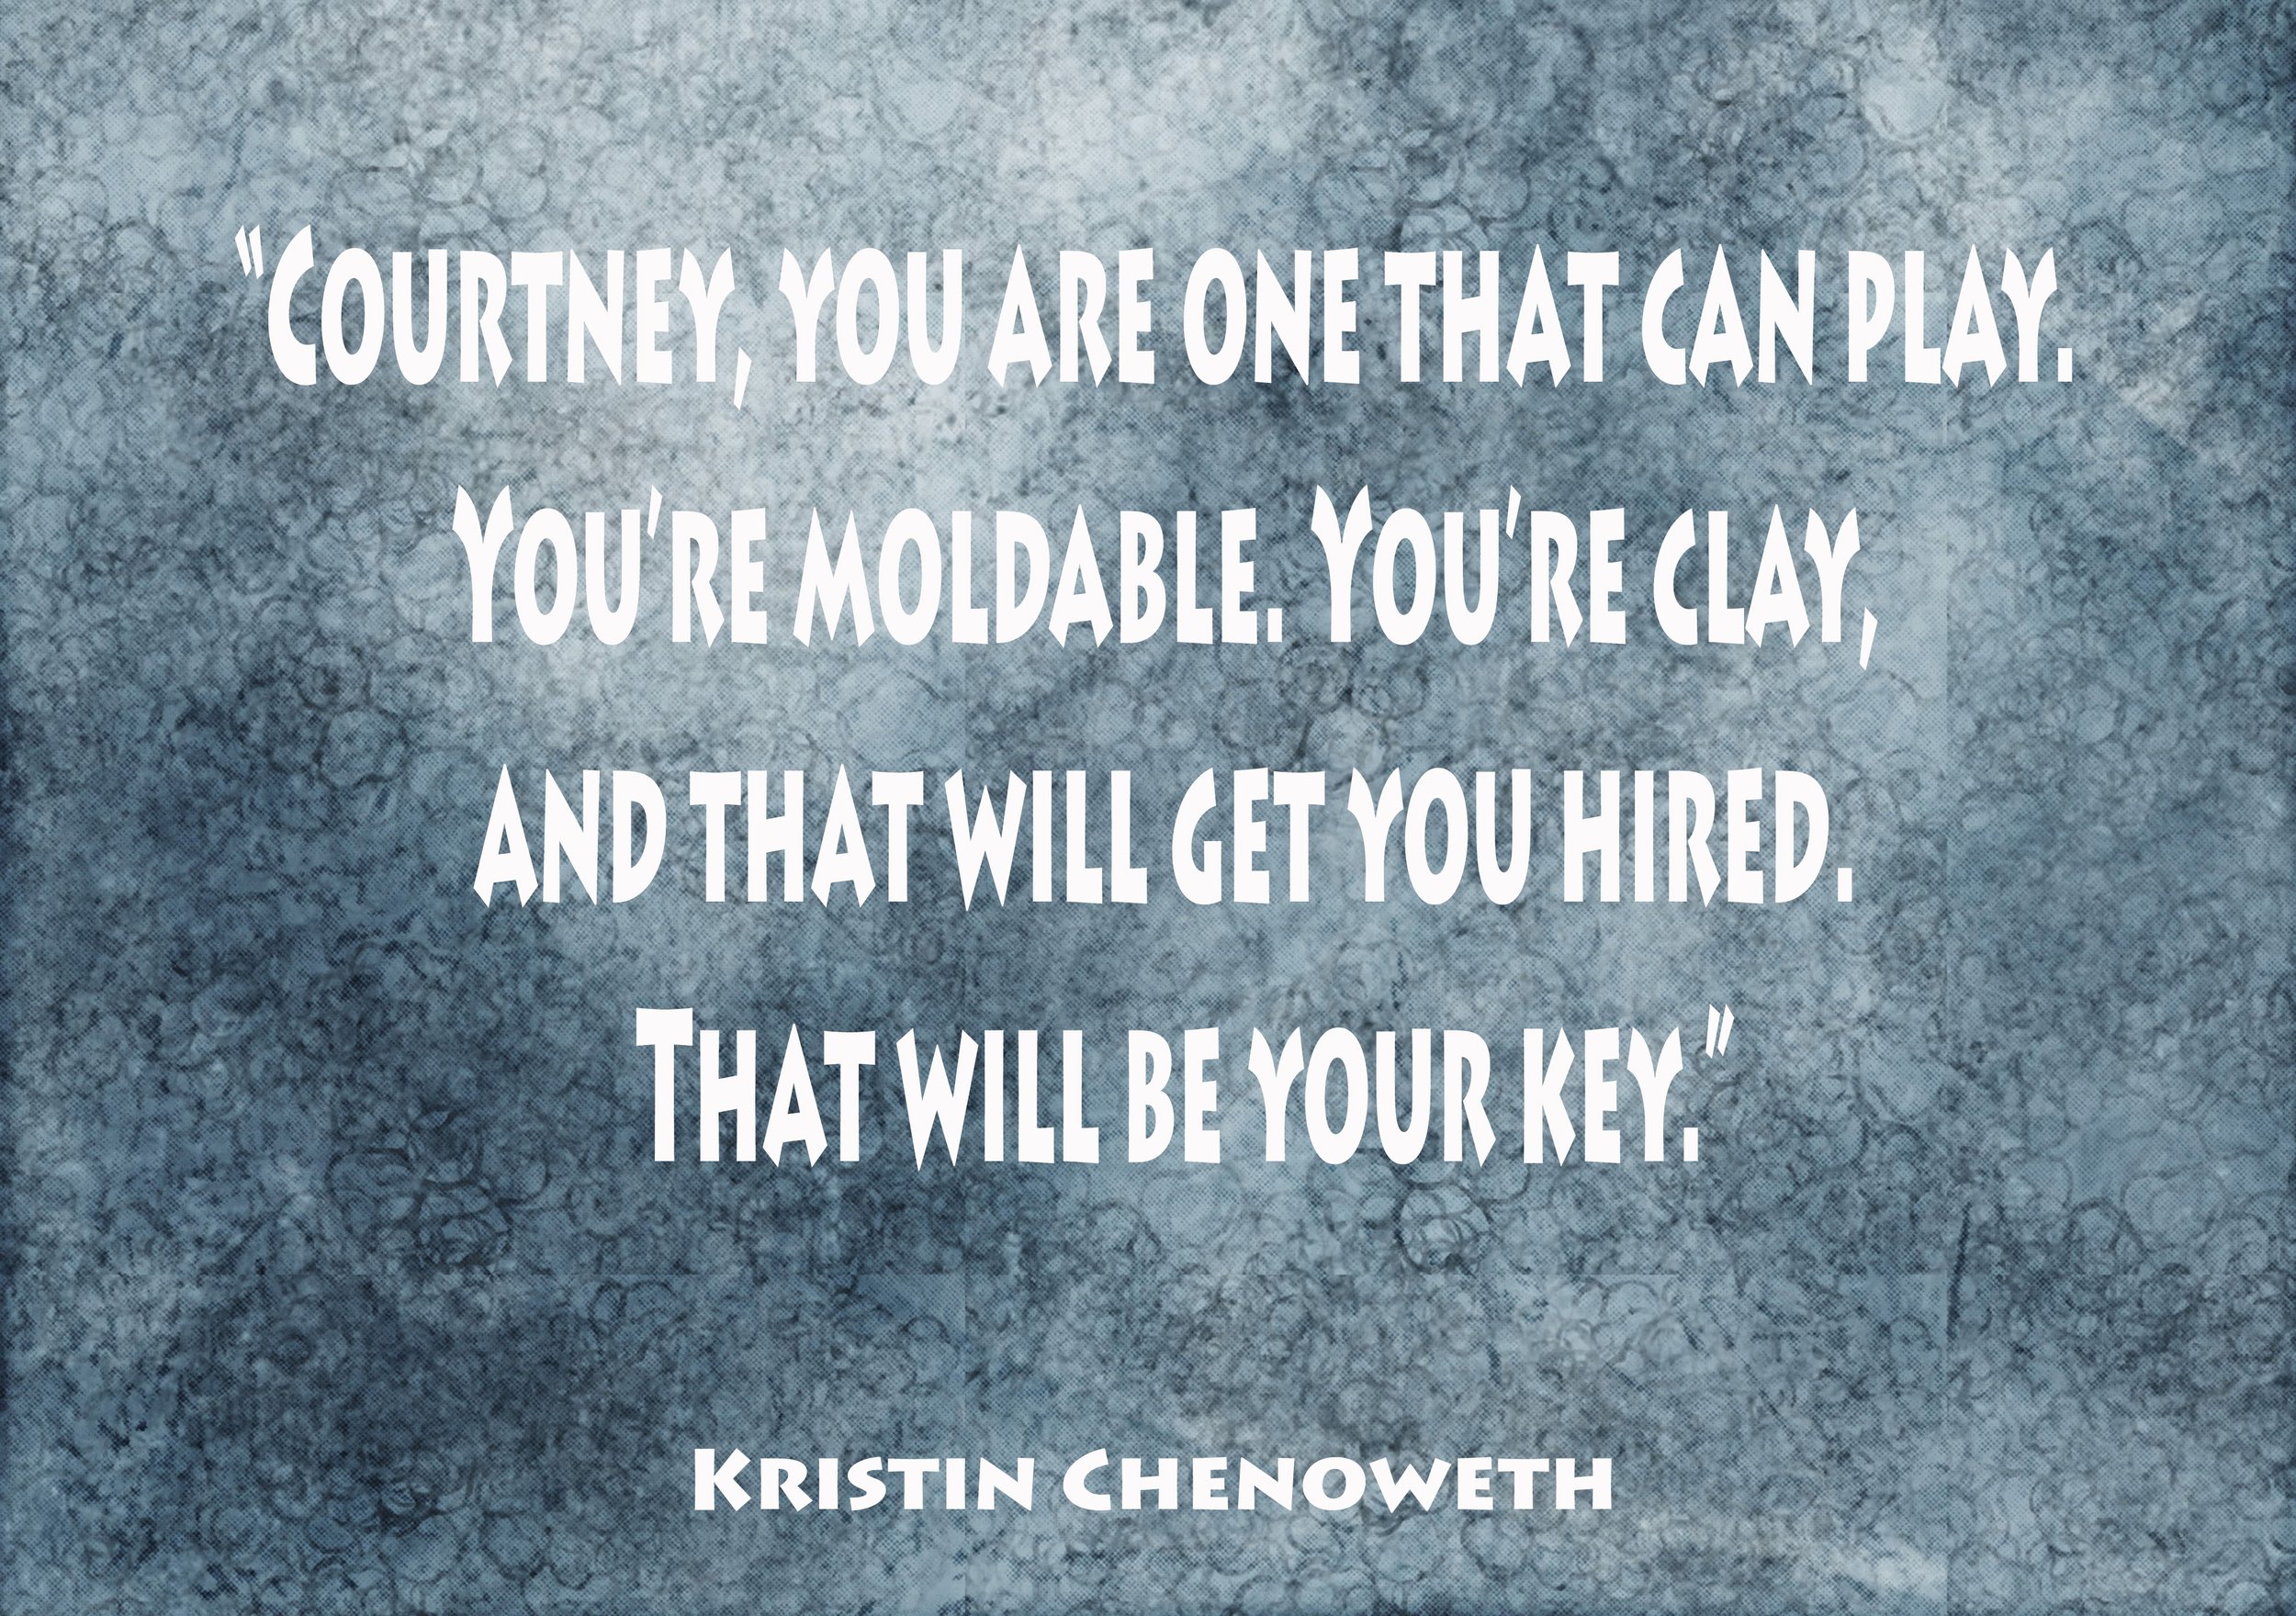 Kristin chenoweth clay quote.jpg